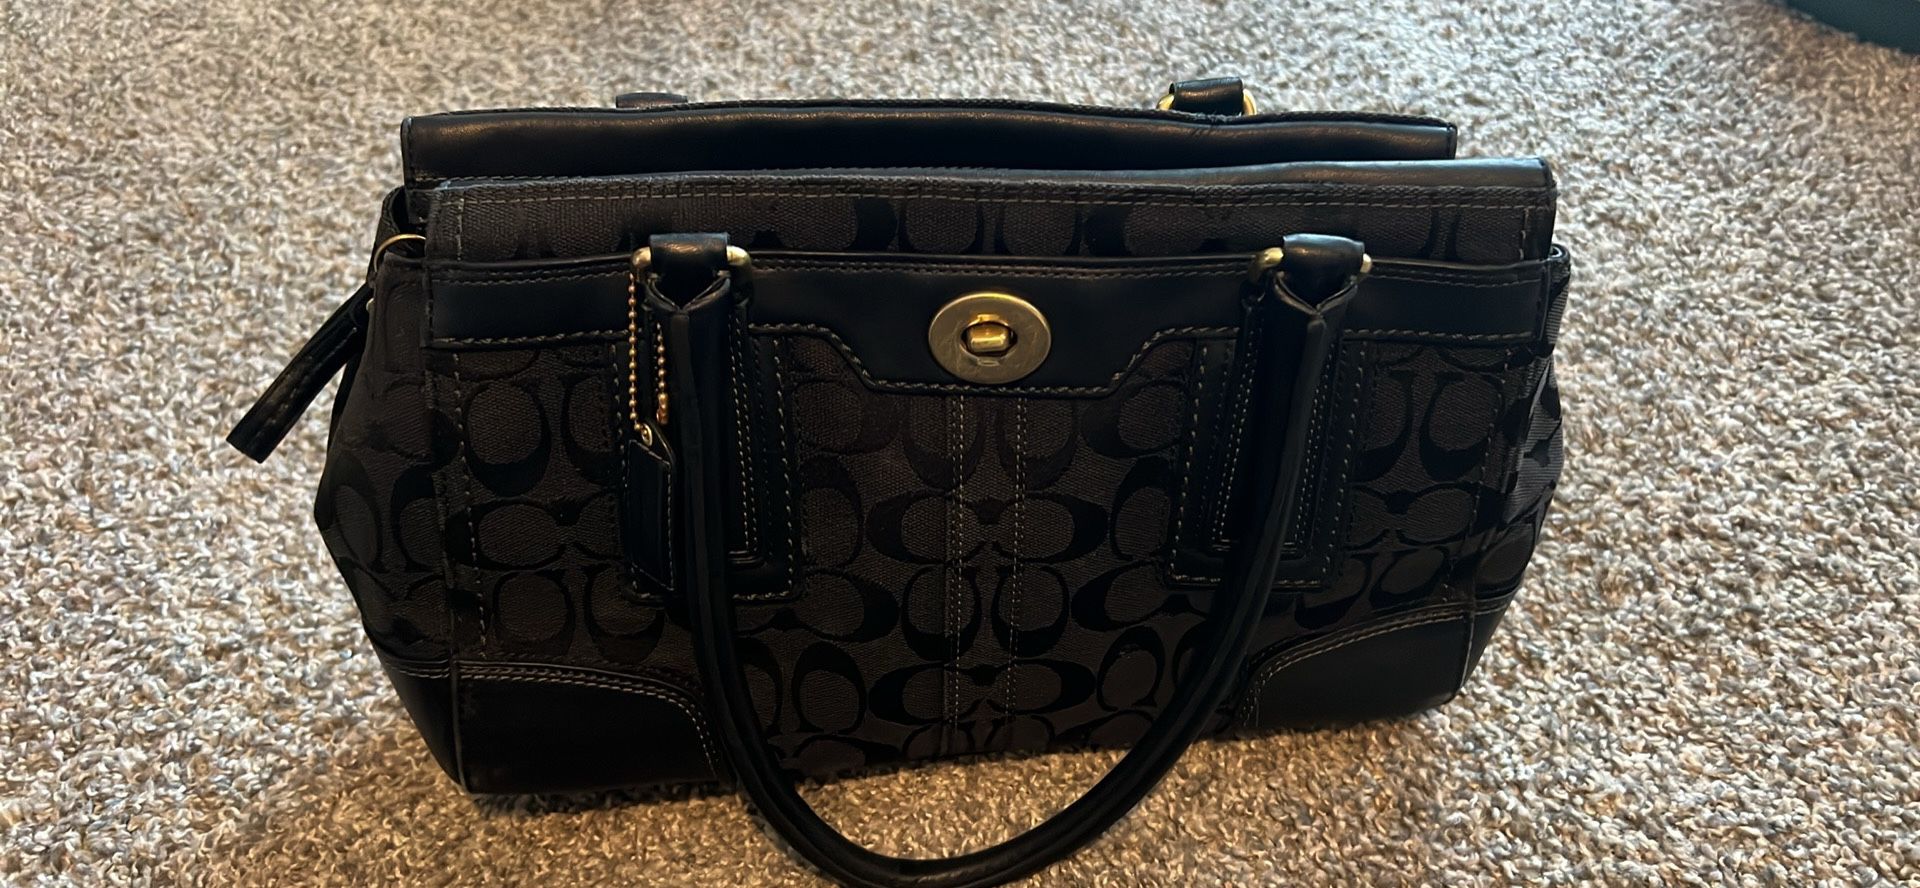 Coach Hampton Signature Carry All Tote Handbag Black